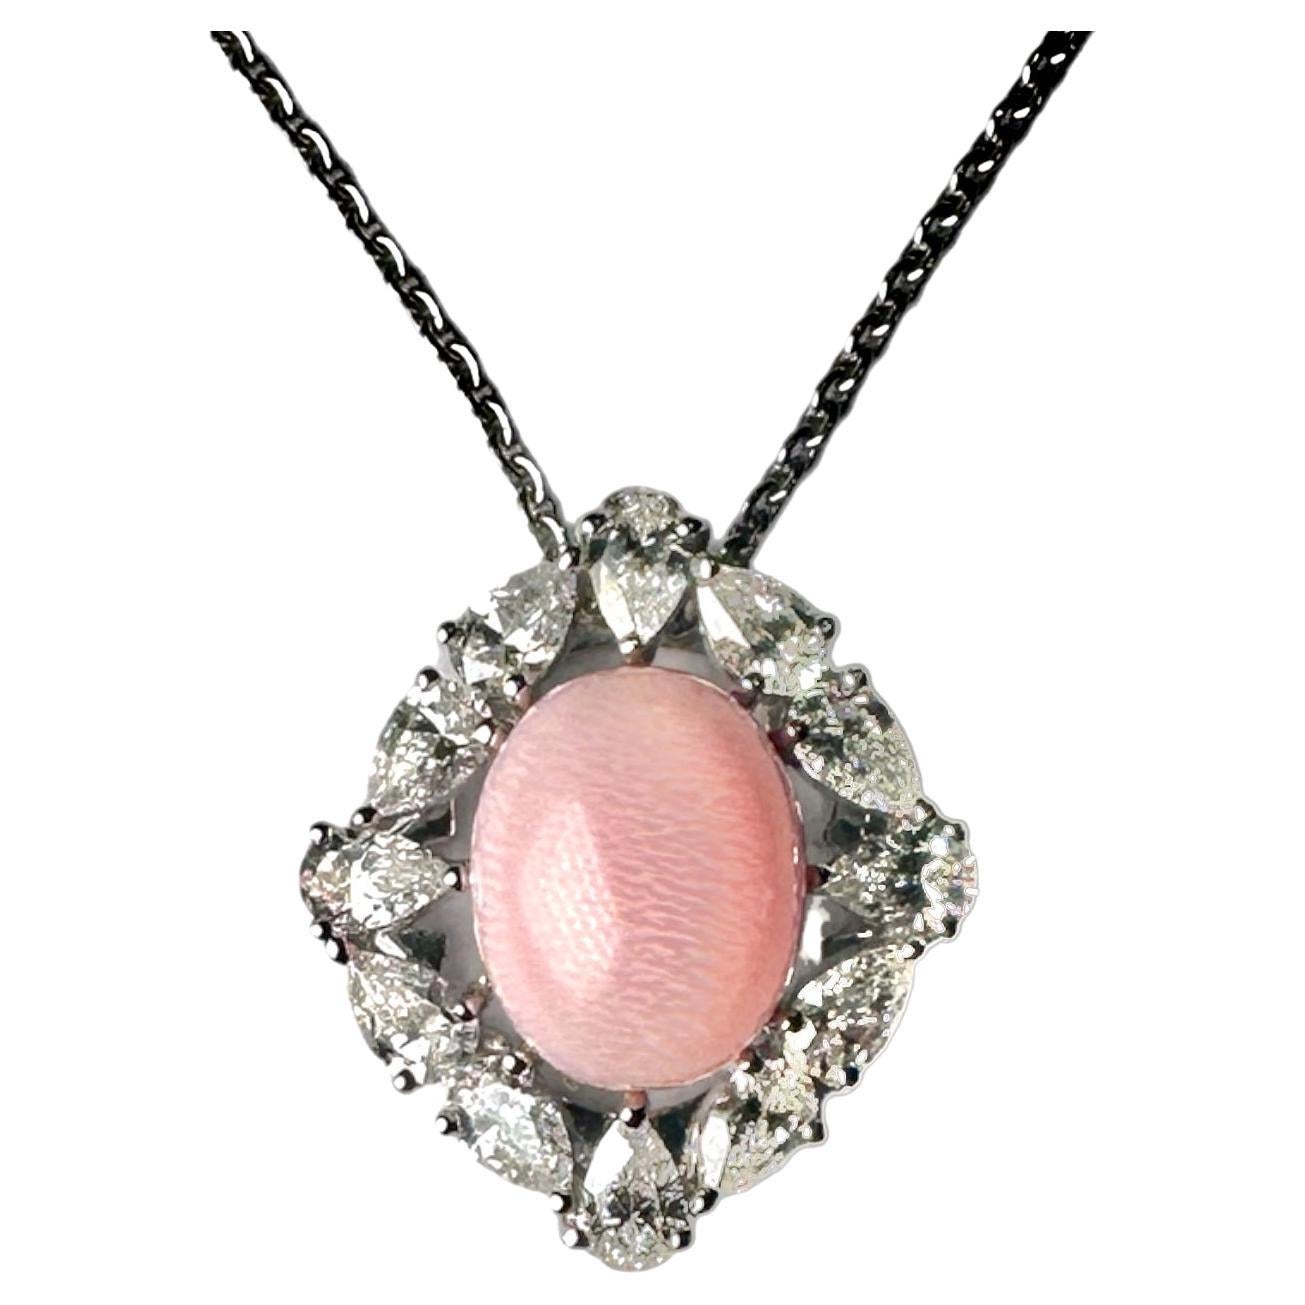 Conch pearl and diamond pendant